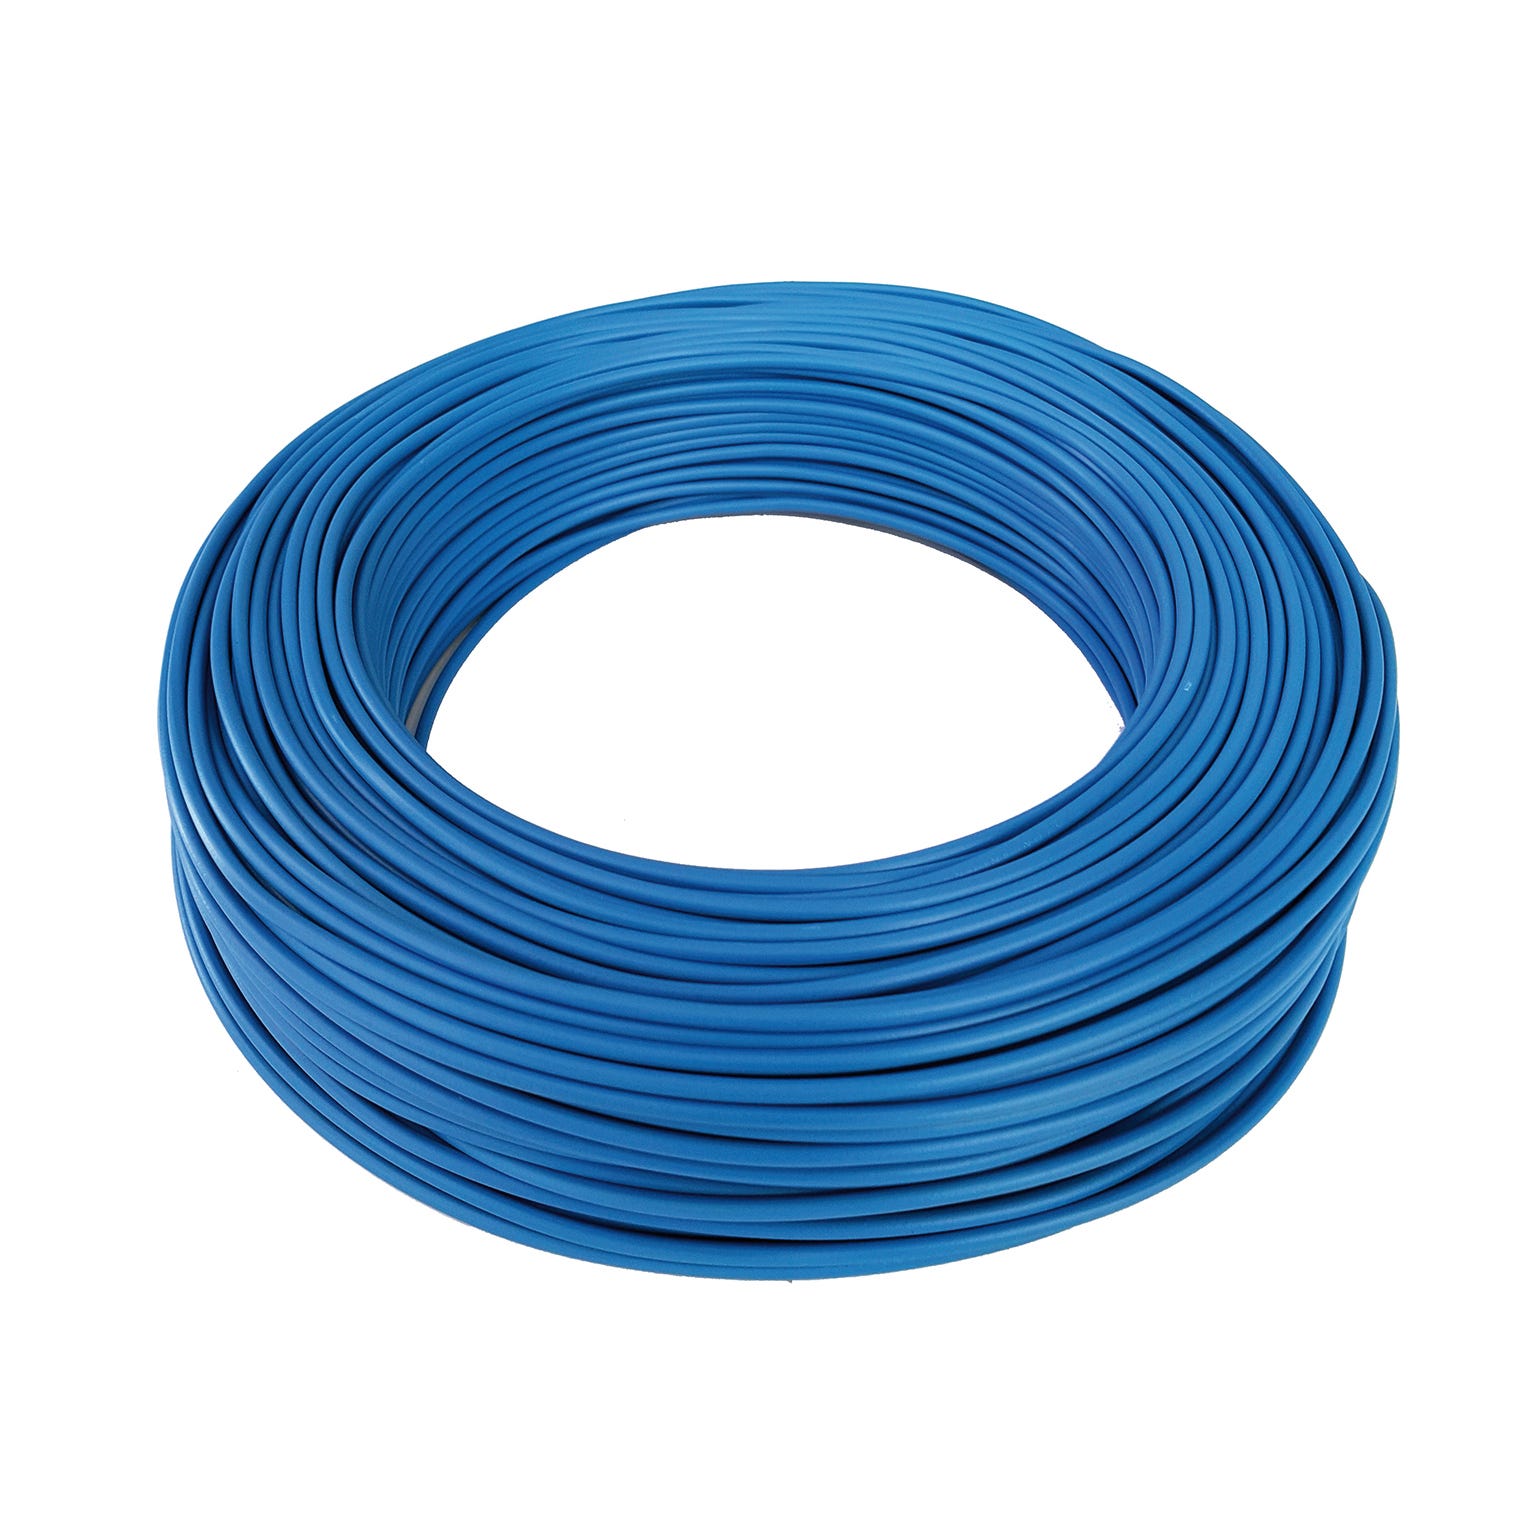 Cavo elettrico FS17 BALDASSARI CAVI 4 mm² 100 m blu